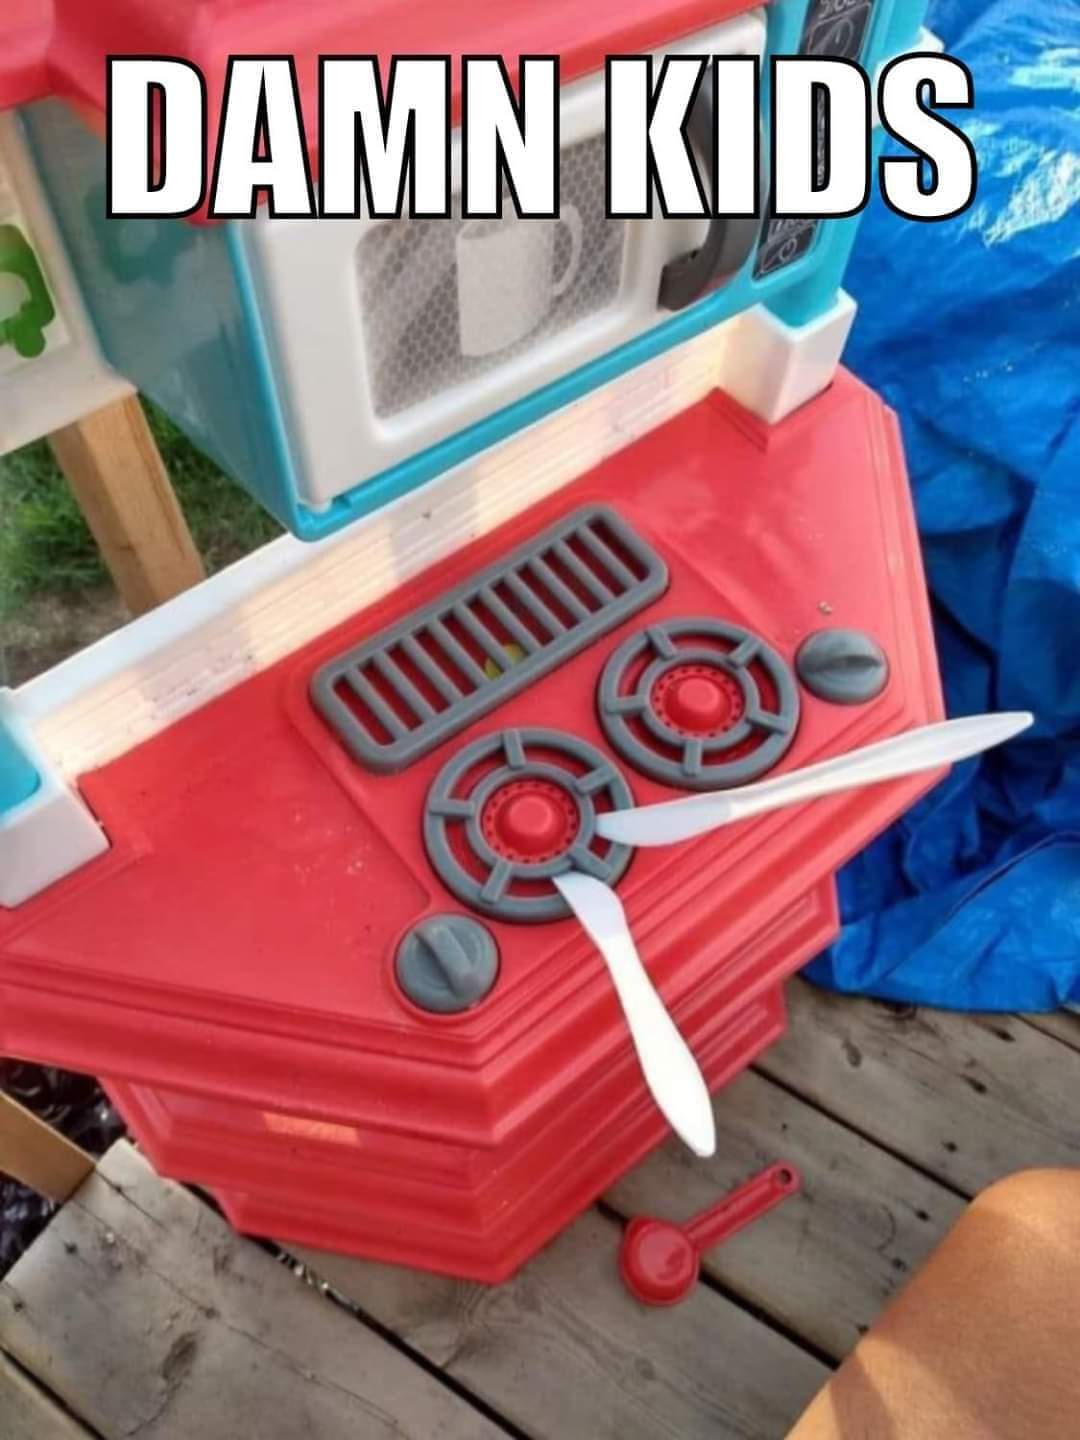 damn kids, hot knives on toy stove